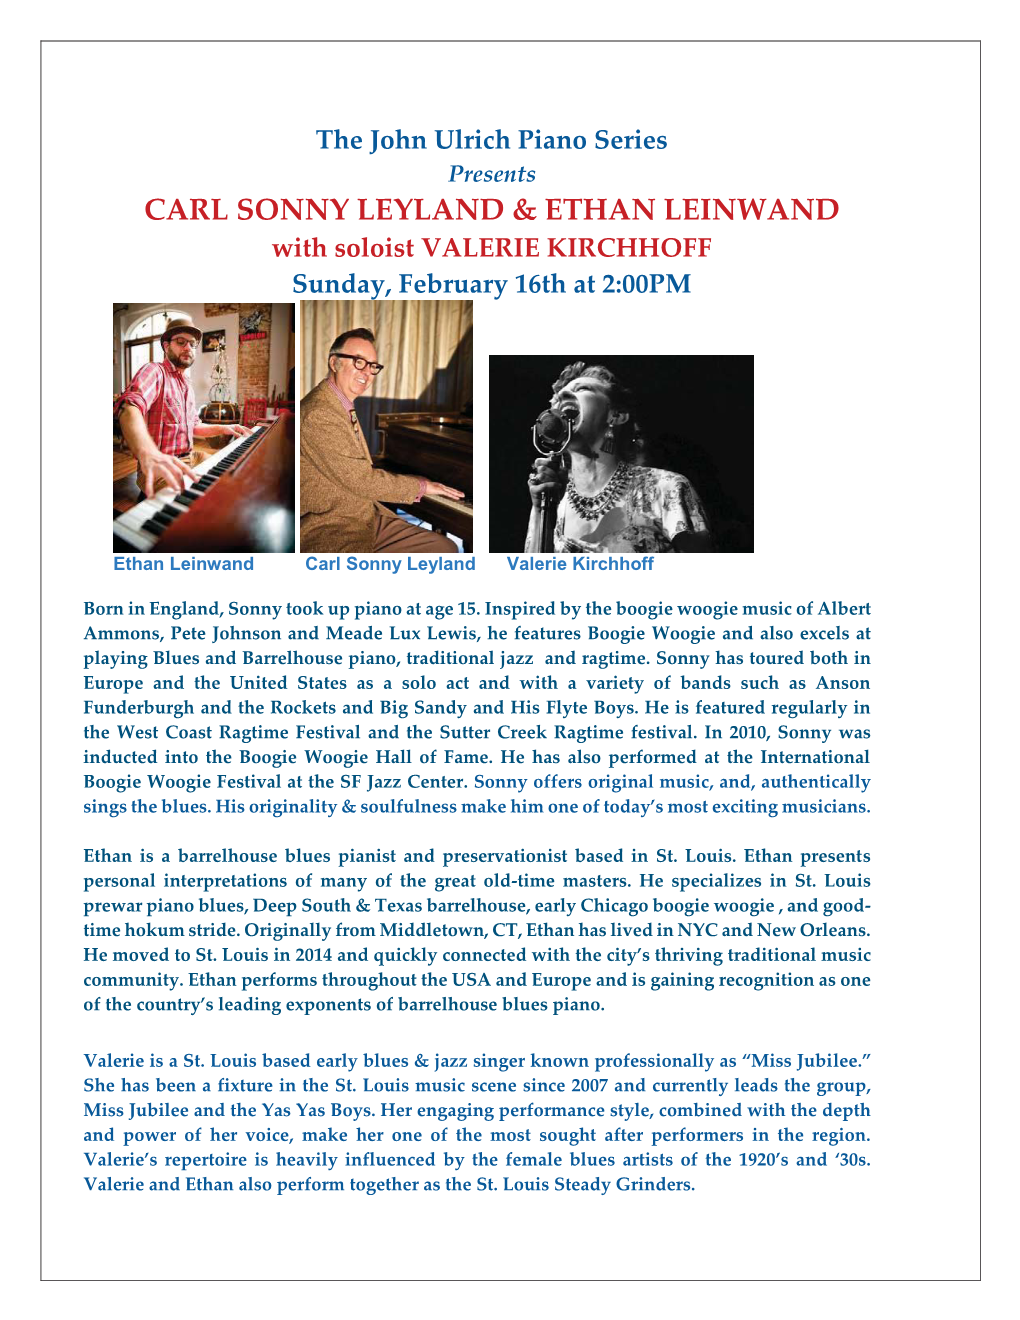 Carl Sonny Leyland & Ethan Leinwand